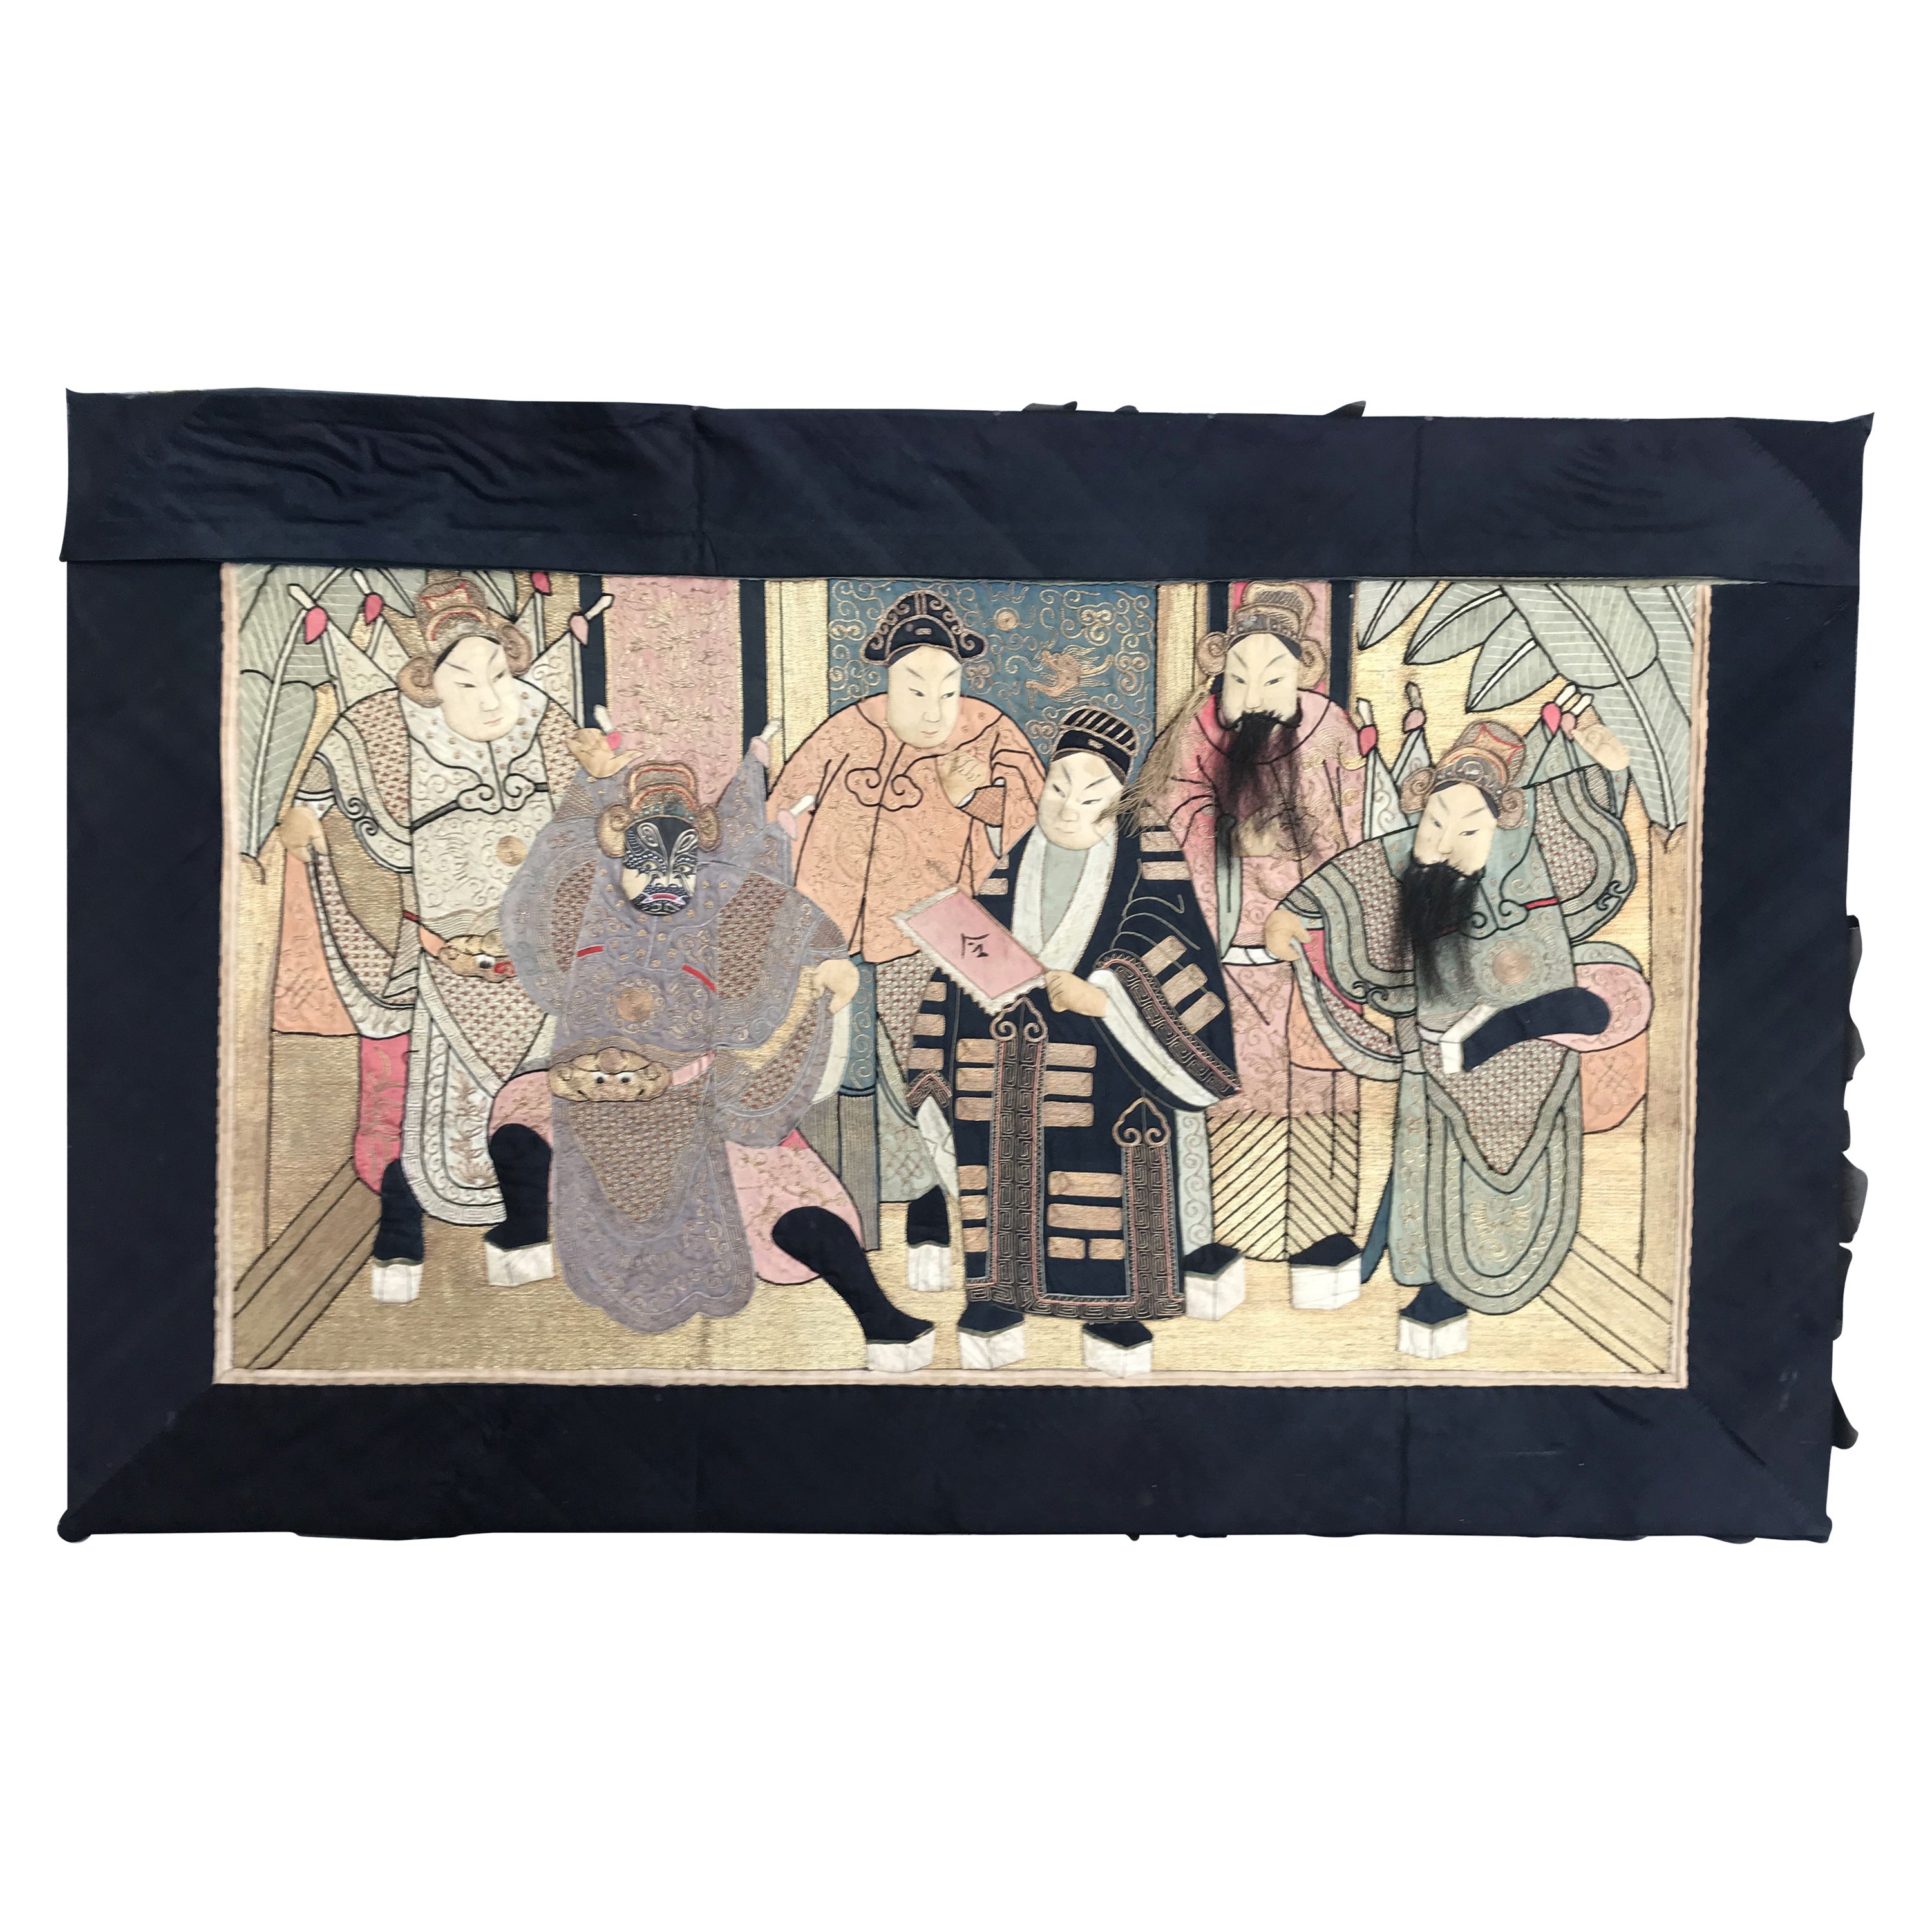 Bobyrug's Wonderful Antique Chinese Pictural Embroidery with Silk and Metal (Merveilleuse broderie picturale chinoise ancienne avec de la soie et du métal)